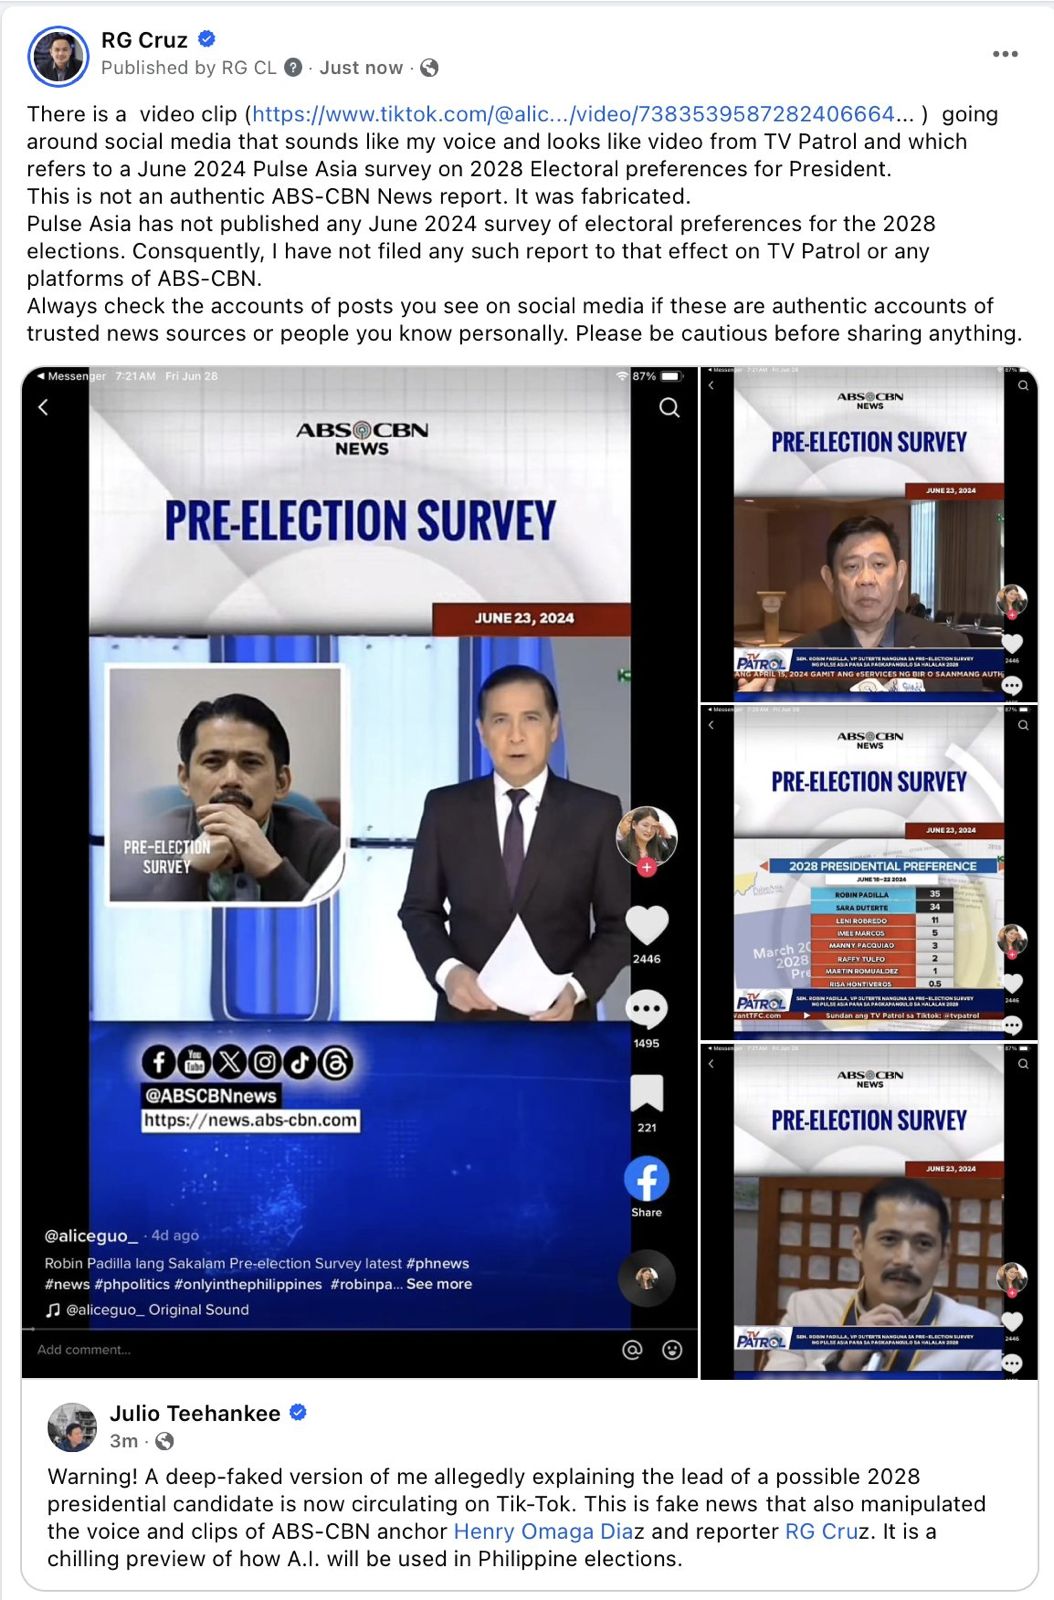 TikTok video on 2028 election survey 'false, fabricated' – ABS-CBN News